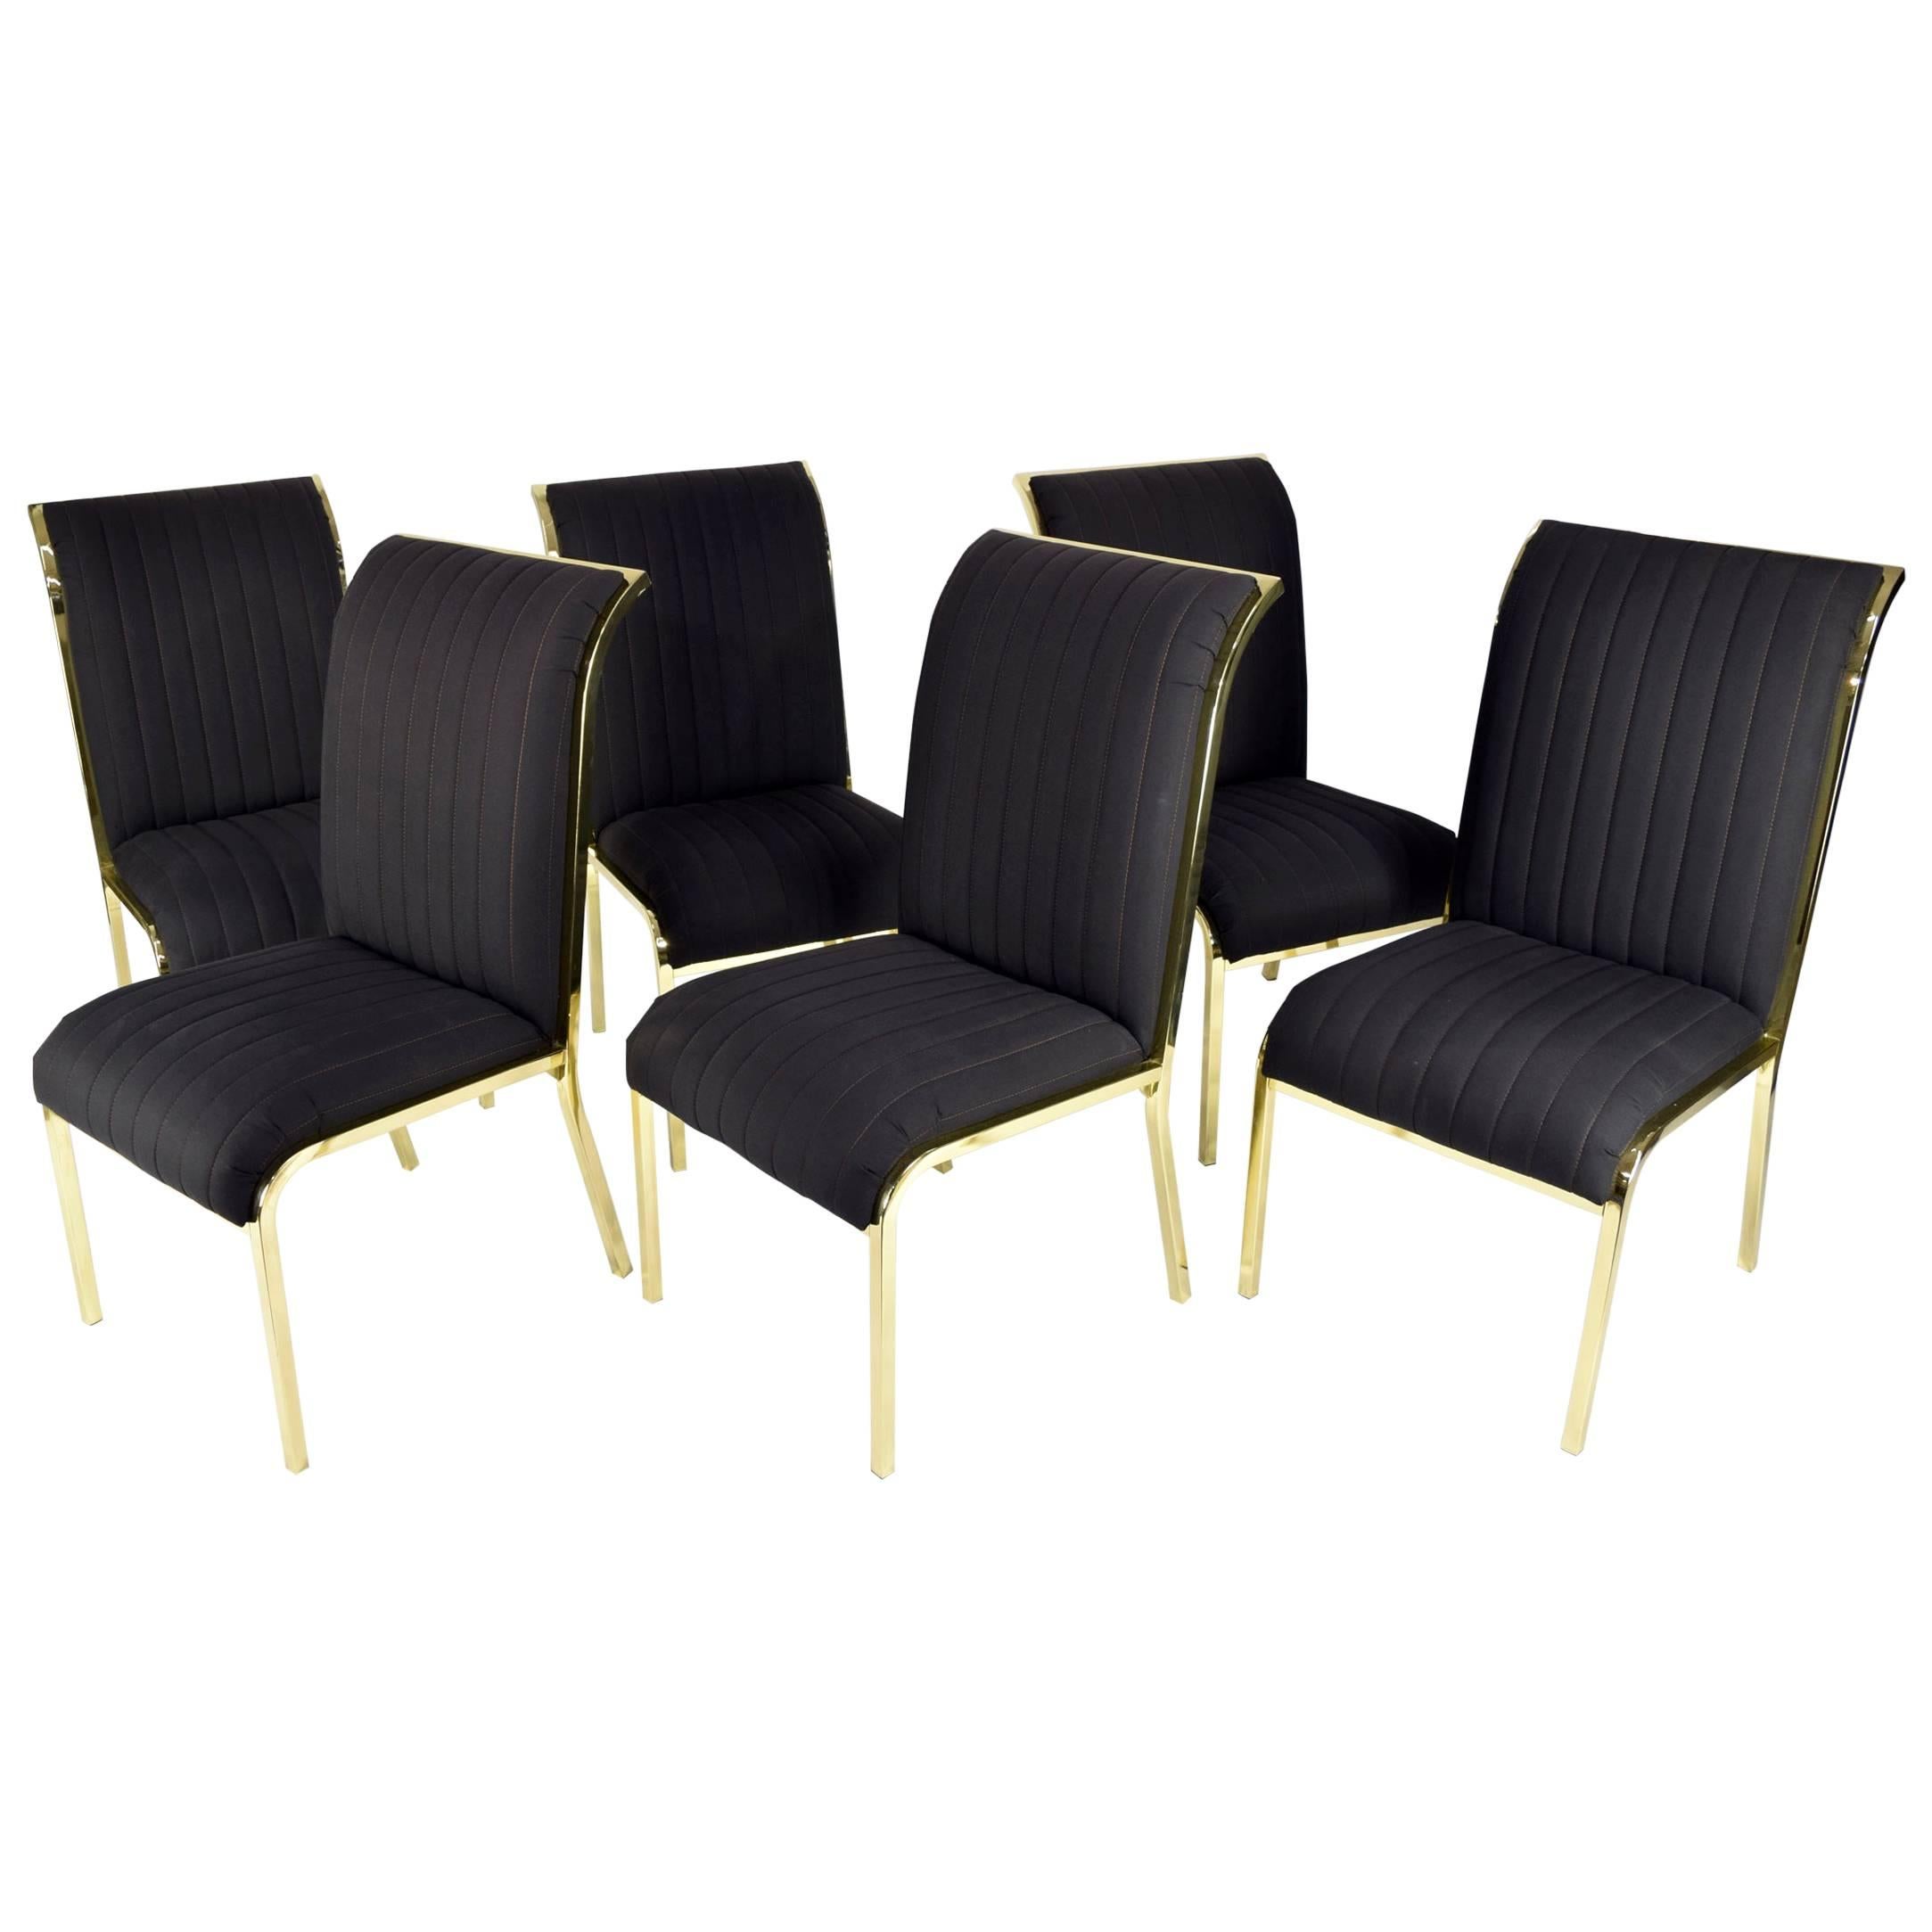 Design Institute of America 'DIA' Dining Chairs in Brass Finish